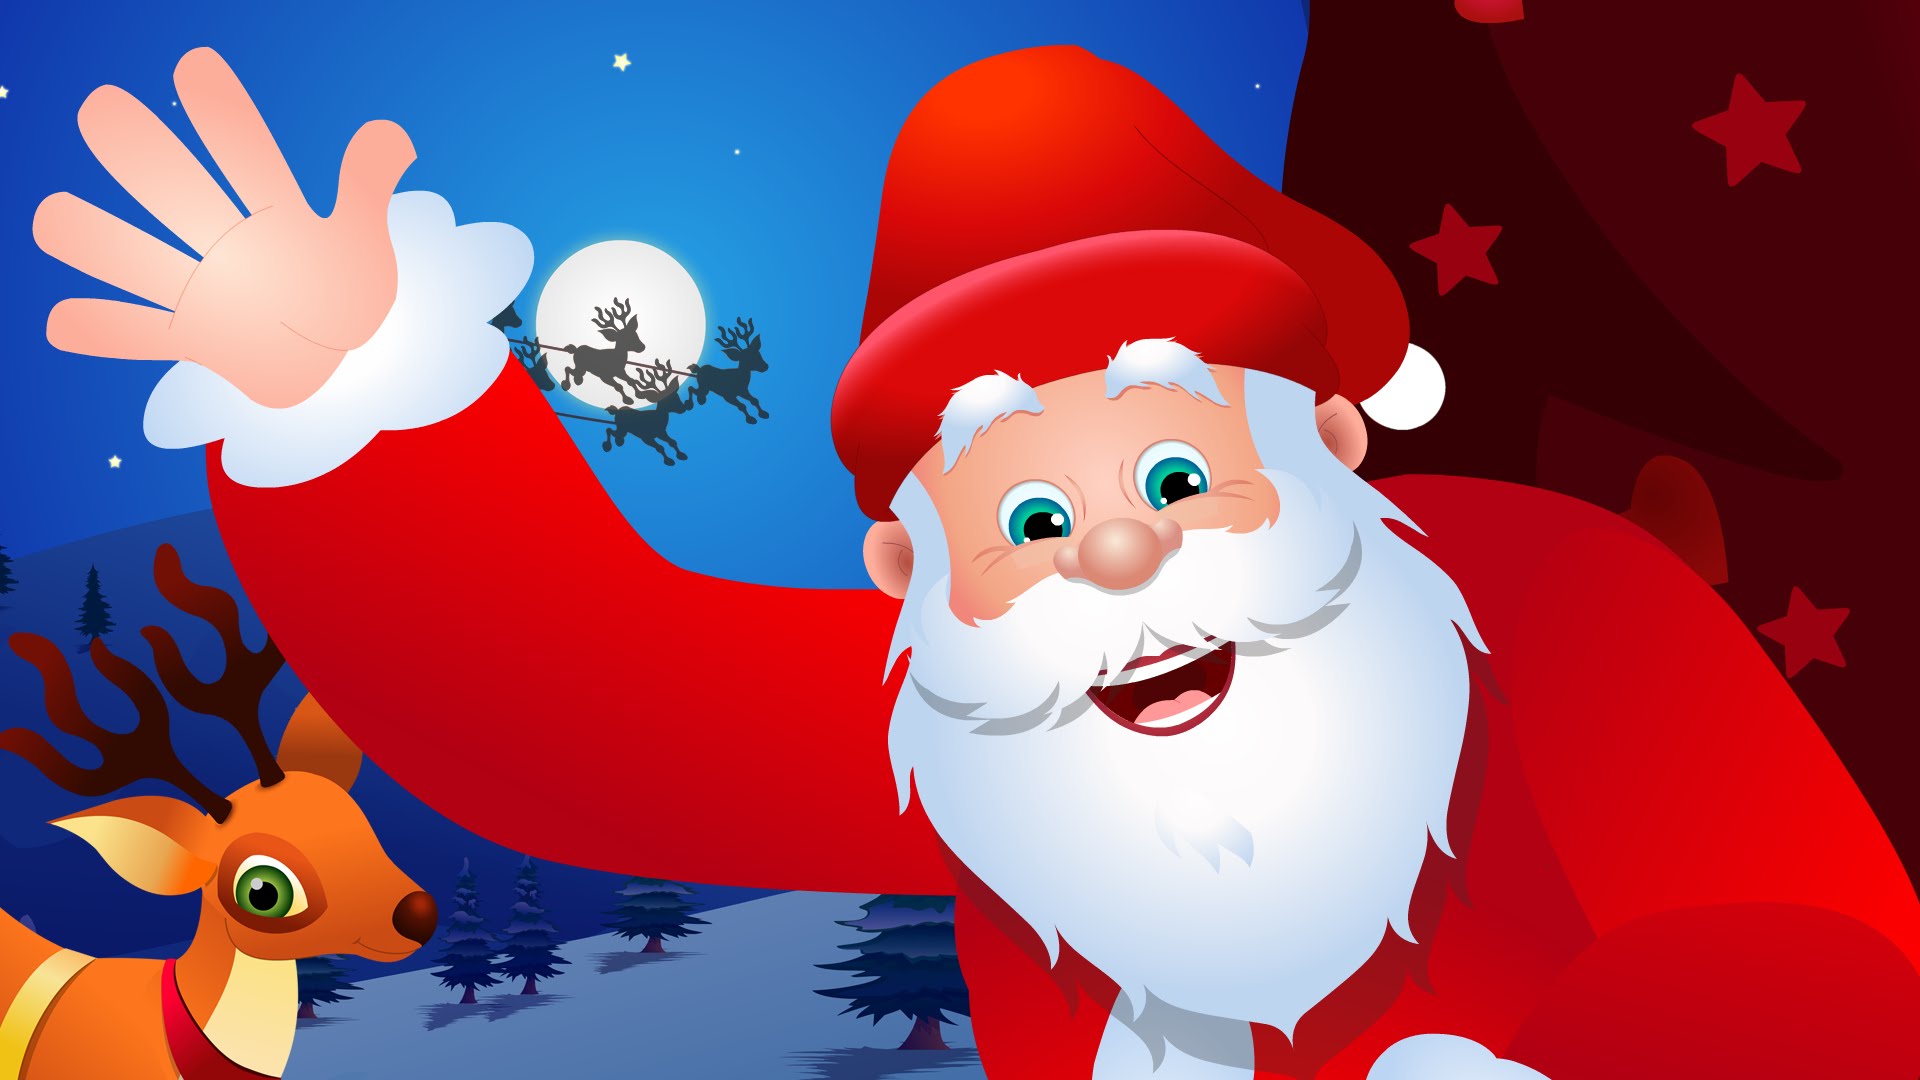 Free download Santa Claus HD wallpaper download [1920x1080] for your Desktop, Mobile & Tablet. Explore Santa Claus Wallpaper. Holiday Desktop Wallpaper, Christmas Wallpaper, Free Santa Wallpaper